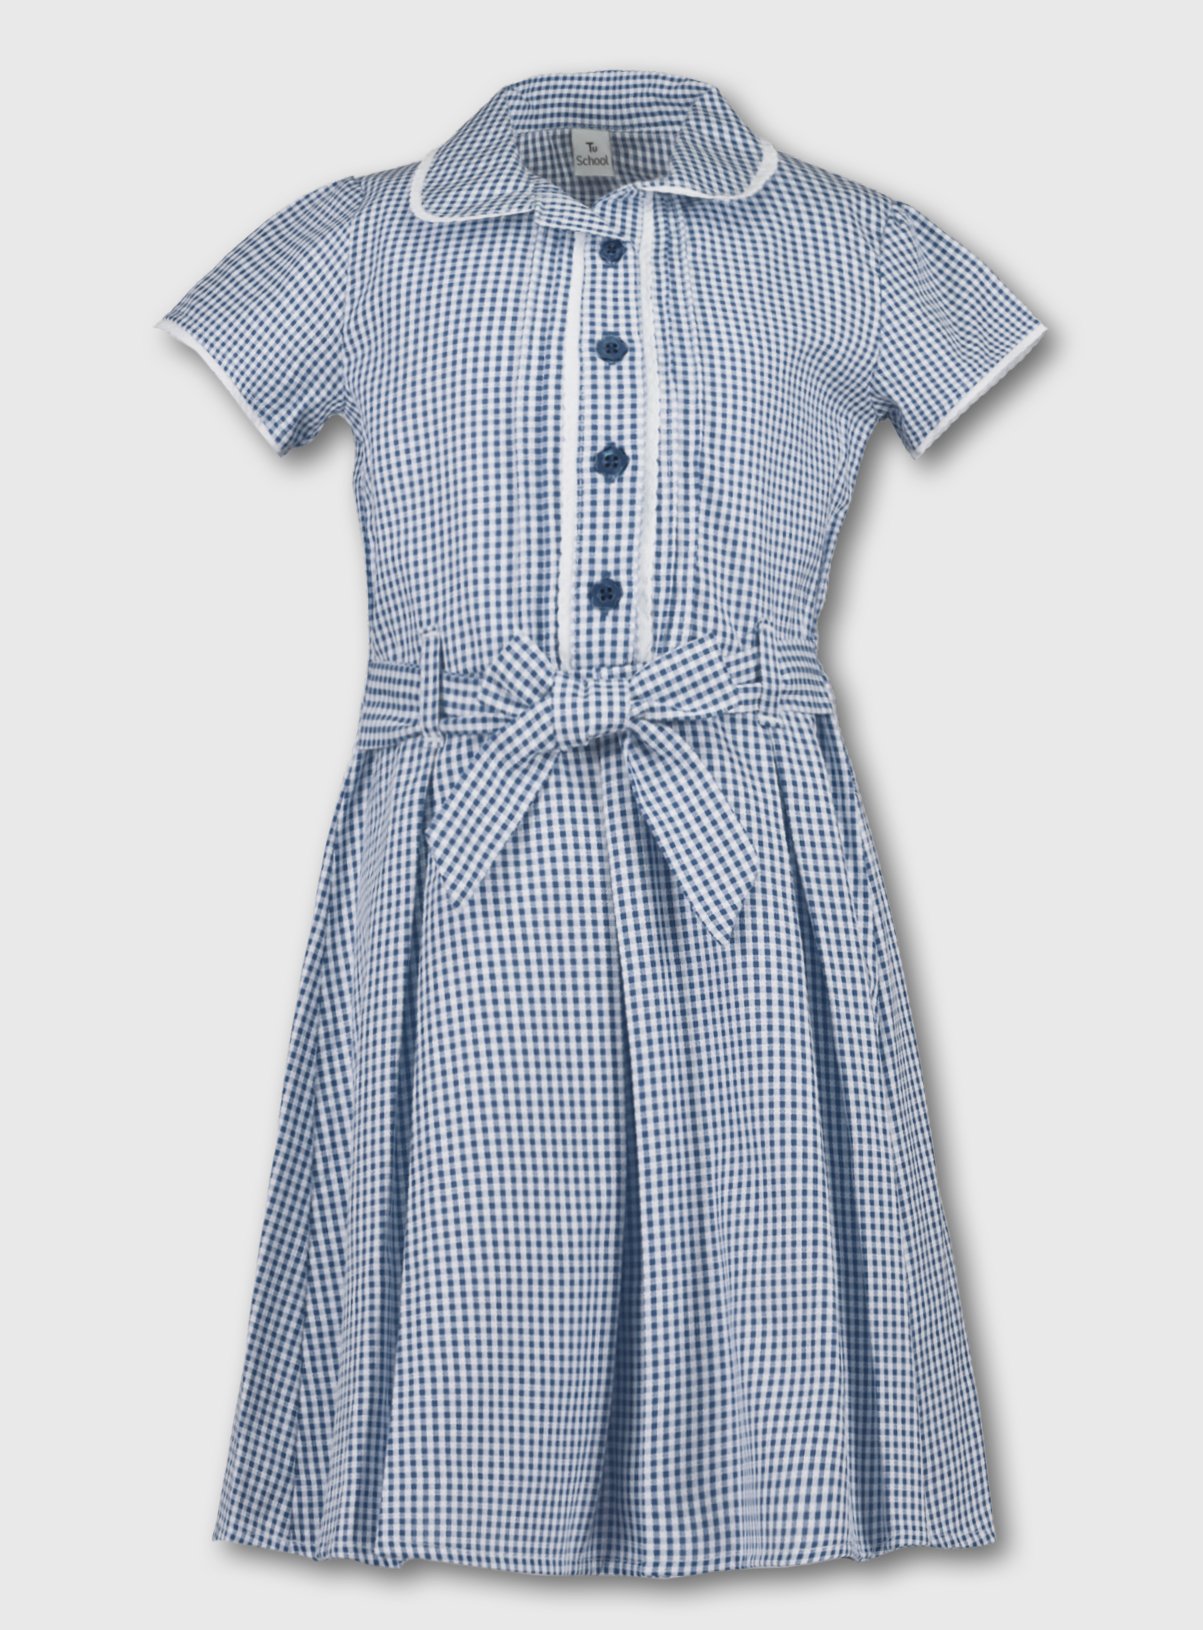 navy blue gingham school dress